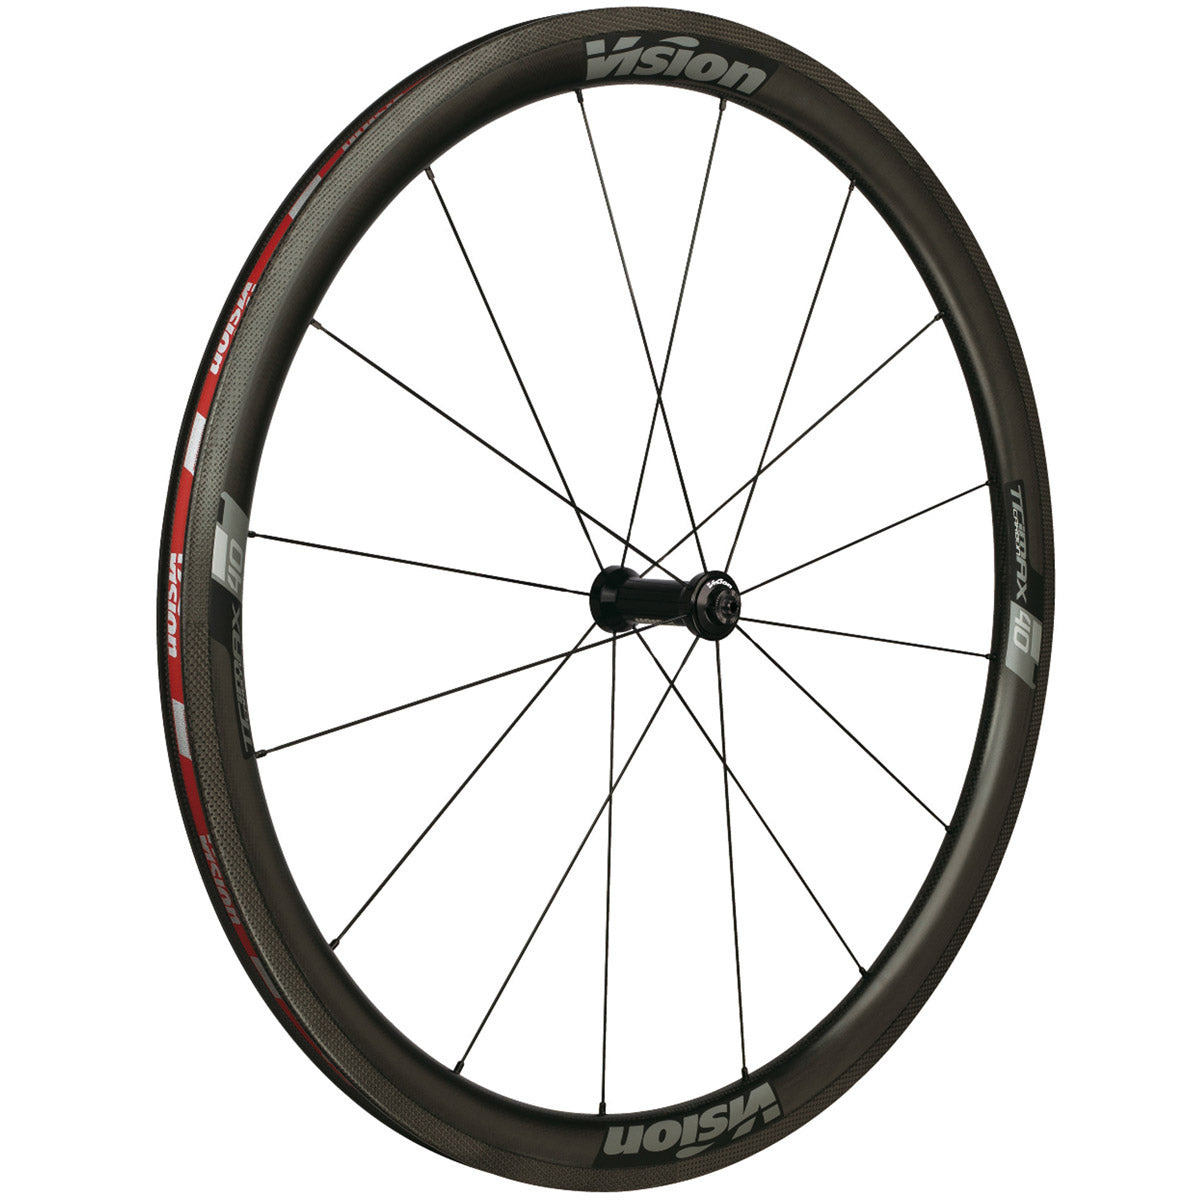 Vision Trimax Carbon 40 wheels - Grey